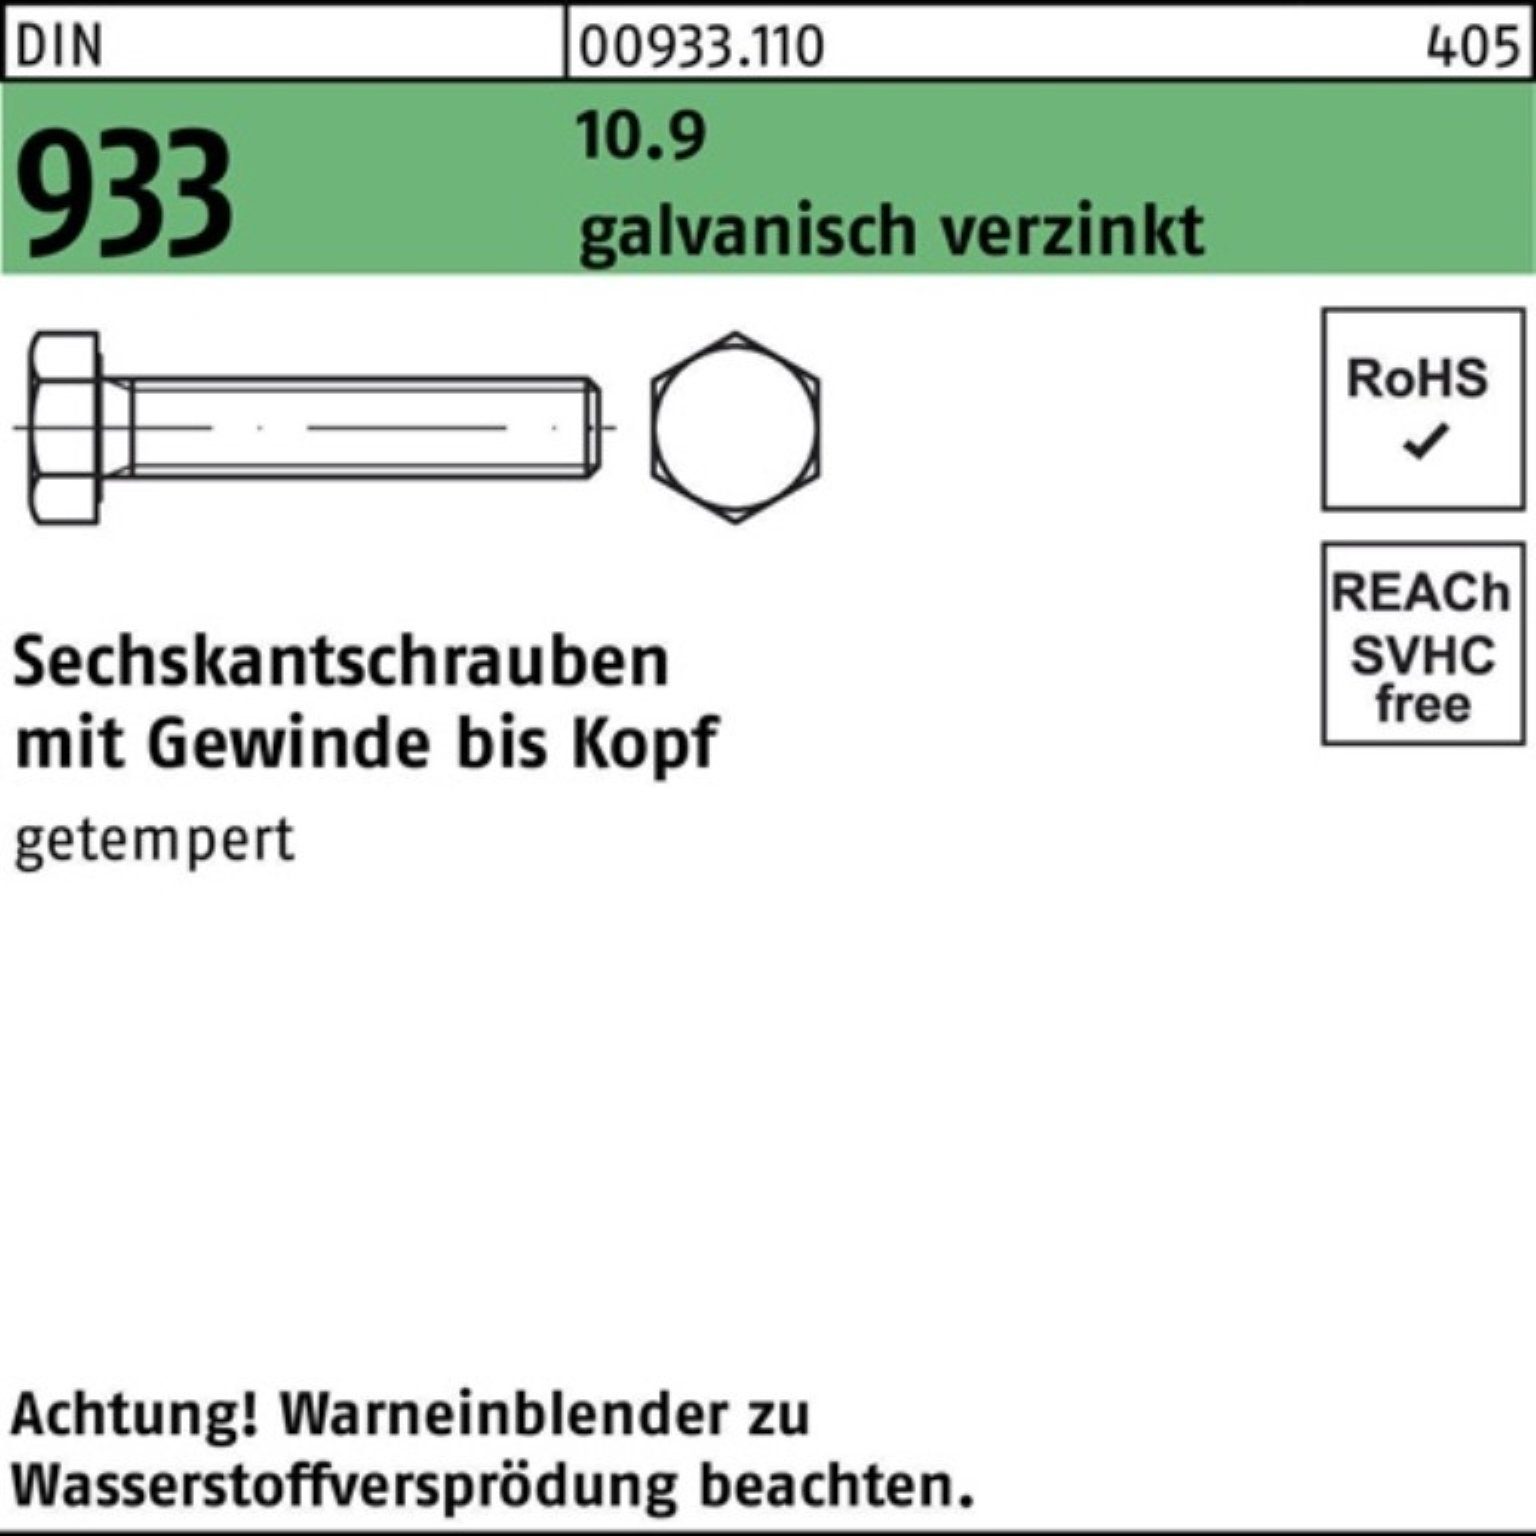 VG Sechskantschraube 100er Reyher 933 10.9 DIN Pack 120 St M36x 1 galv.verz. Sechskantschraube